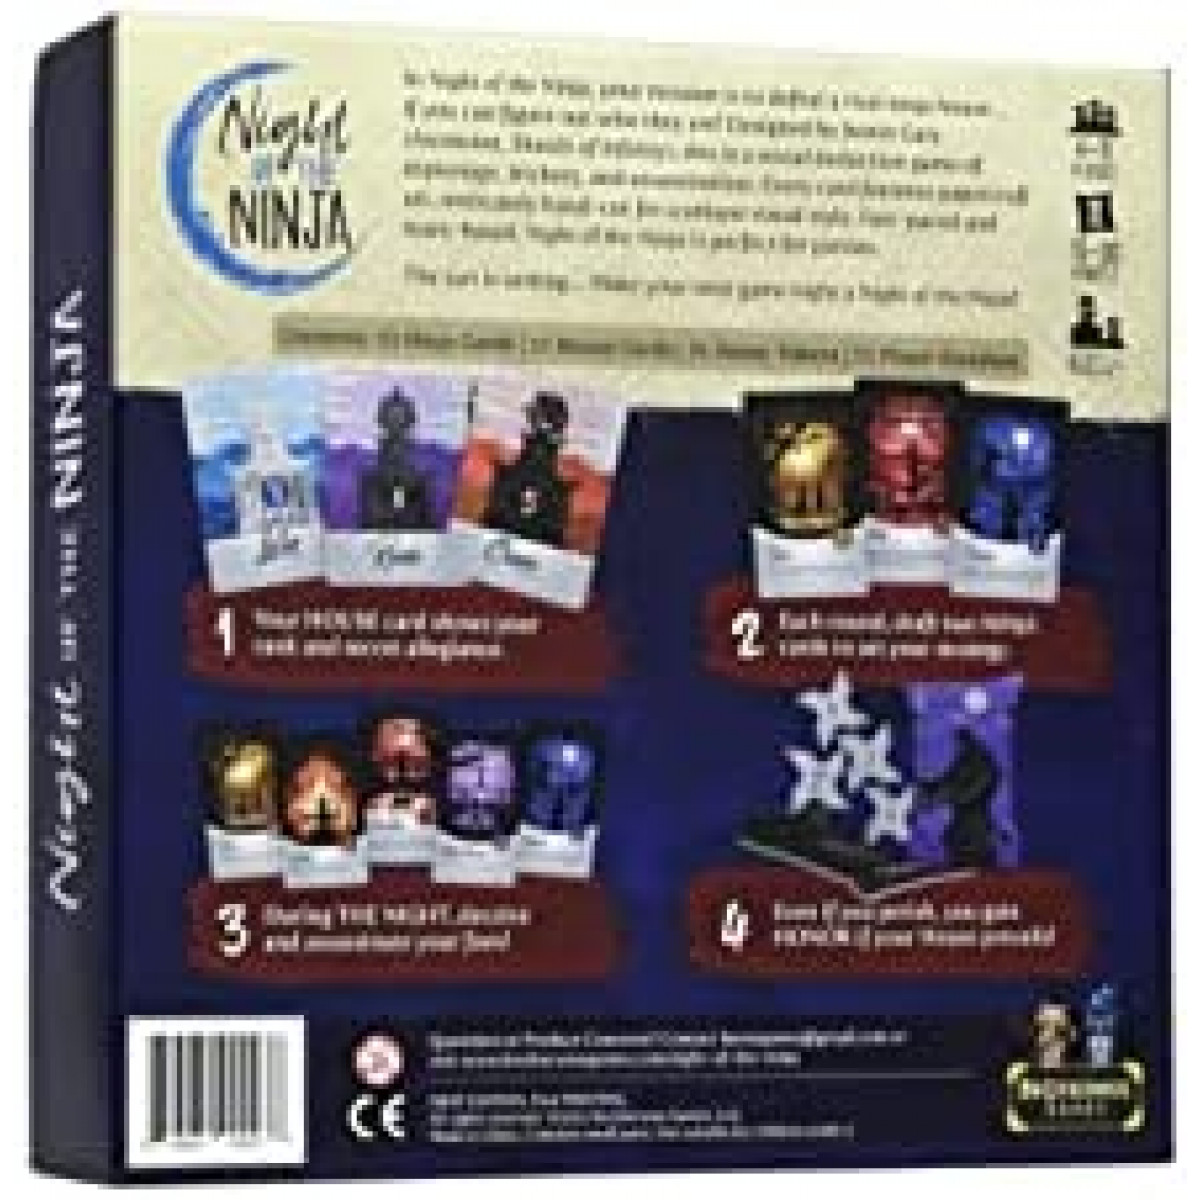 Night of the Ninja — Brotherwise Games